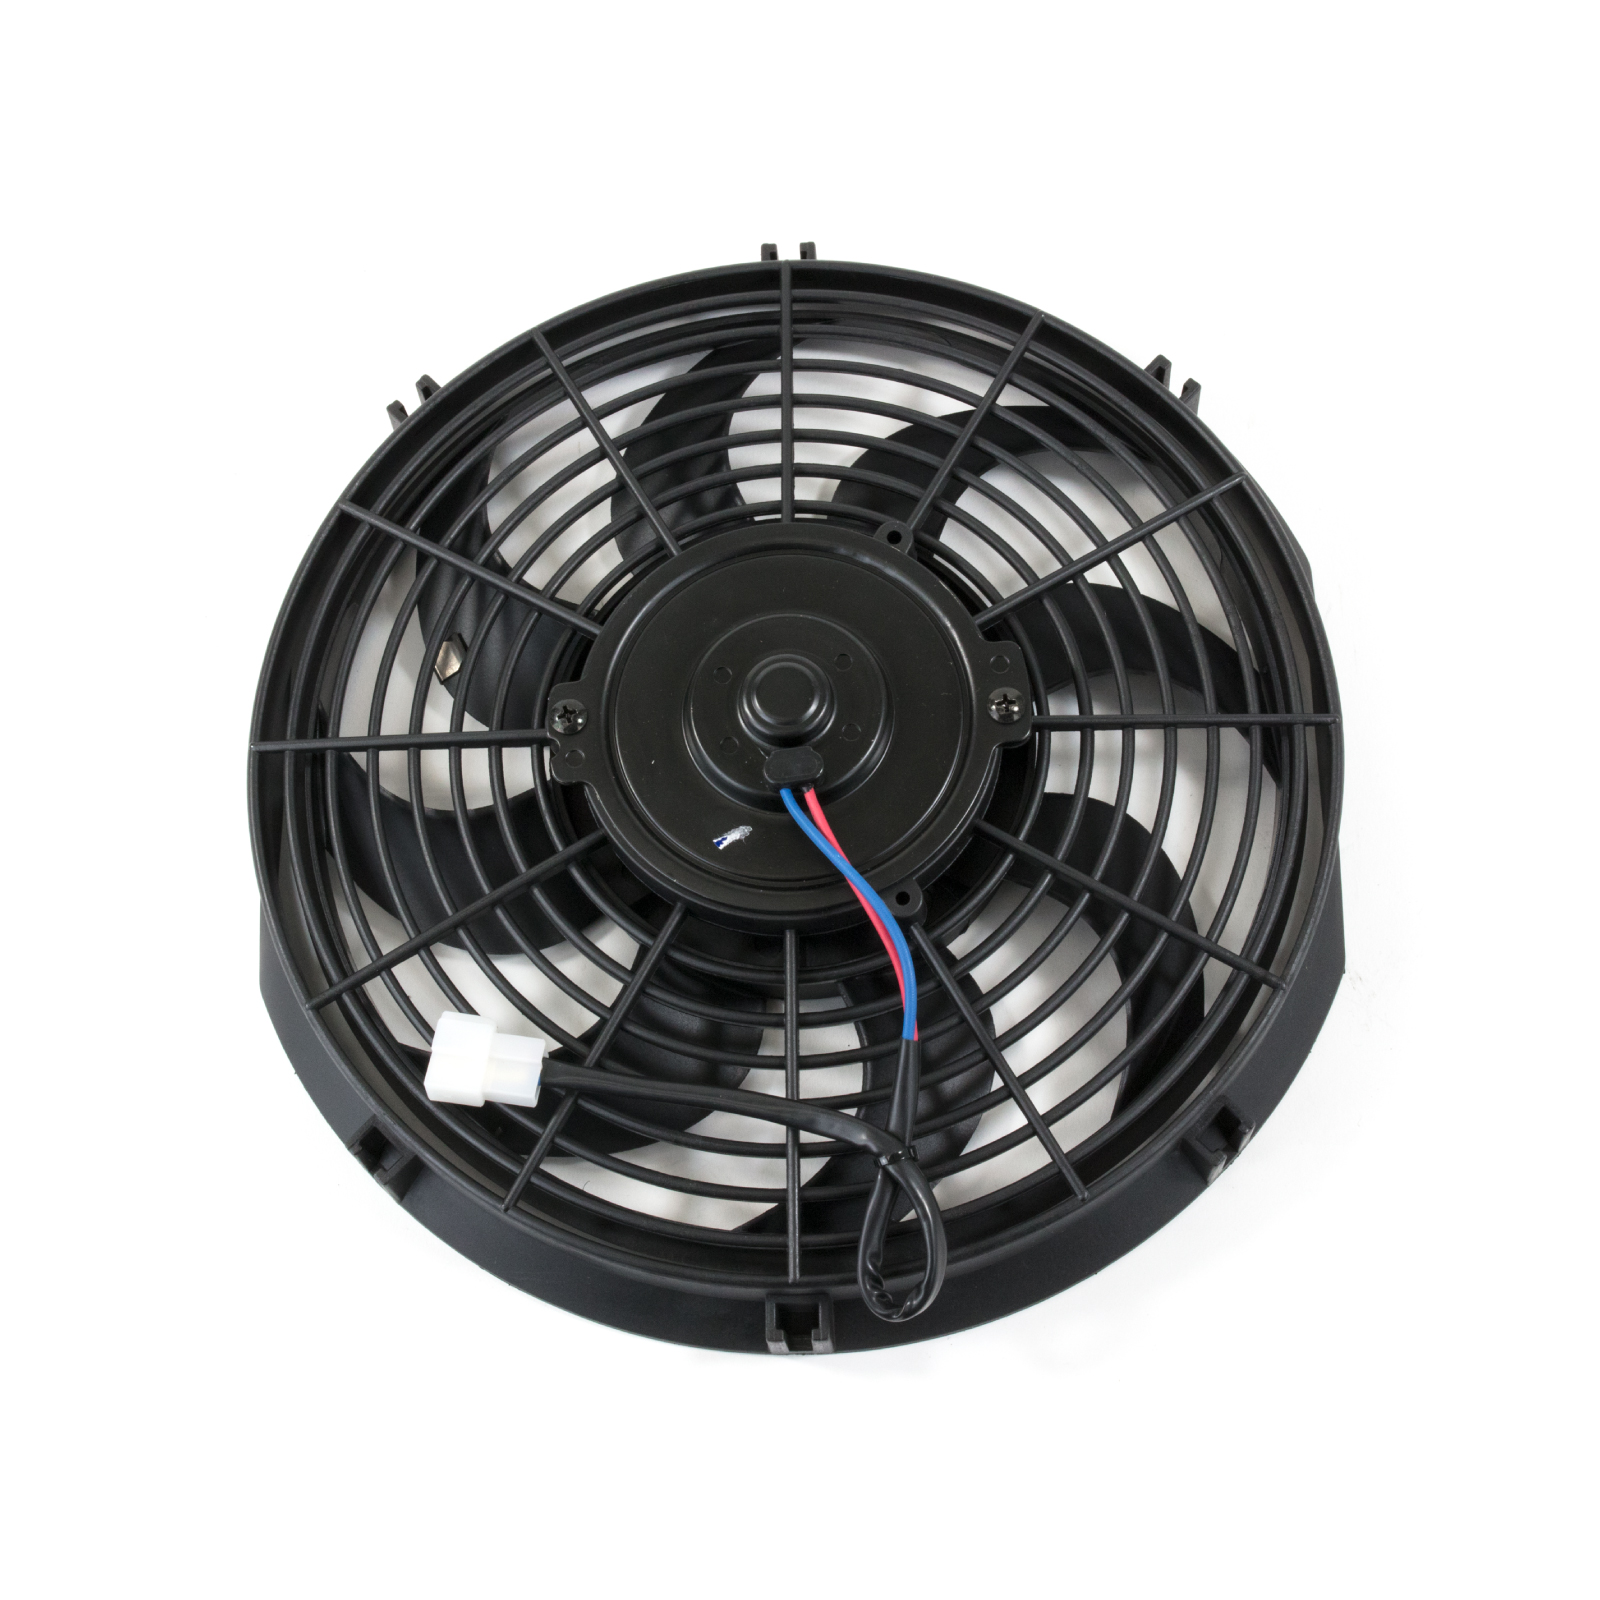 Pro Series Universal S-Blade 12" Black Cooling Fan